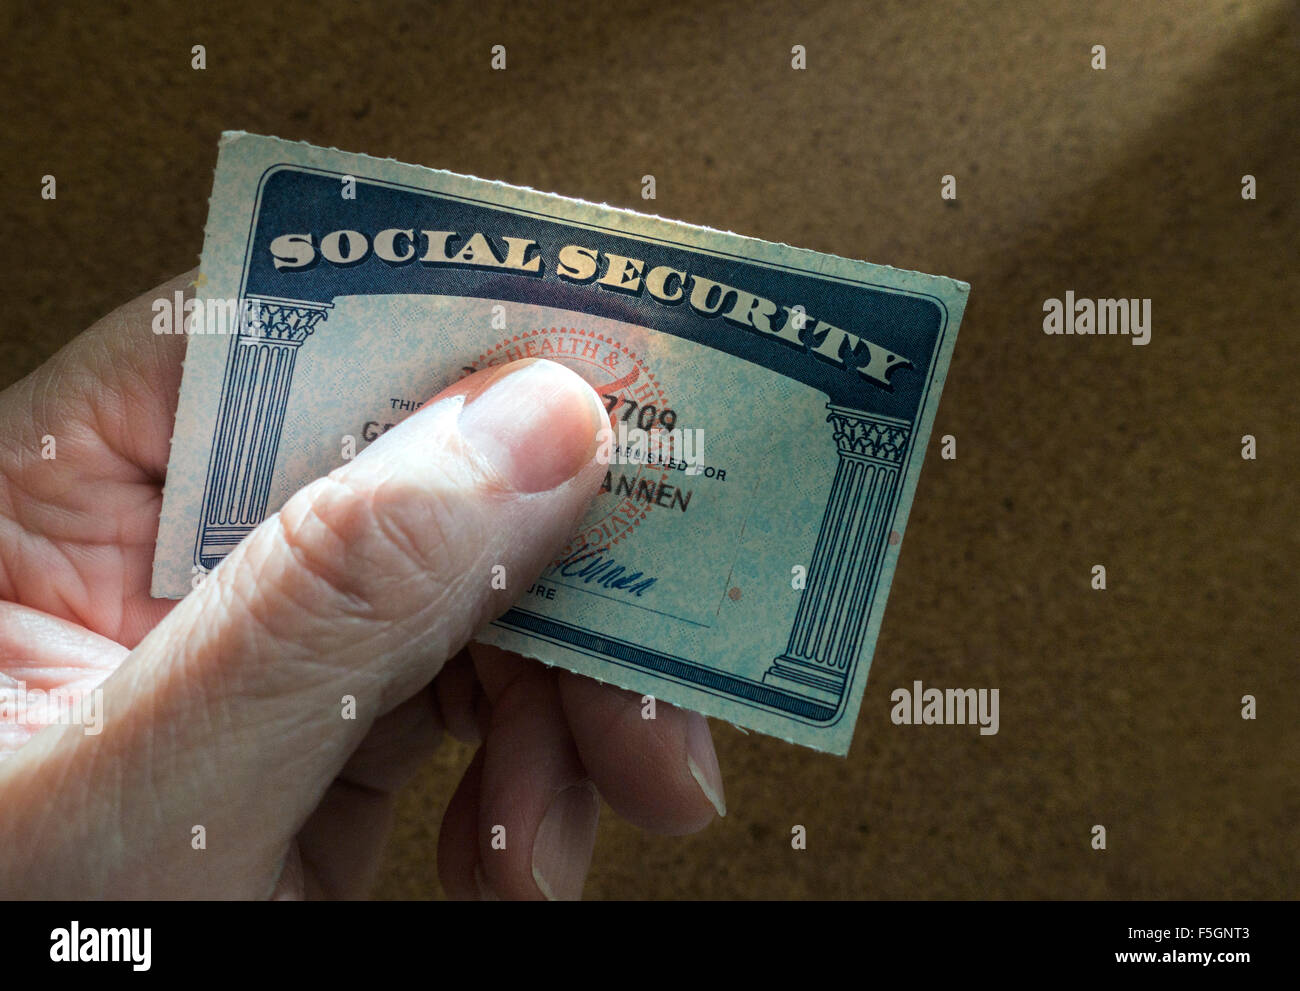 man holding social security card Stock Photo